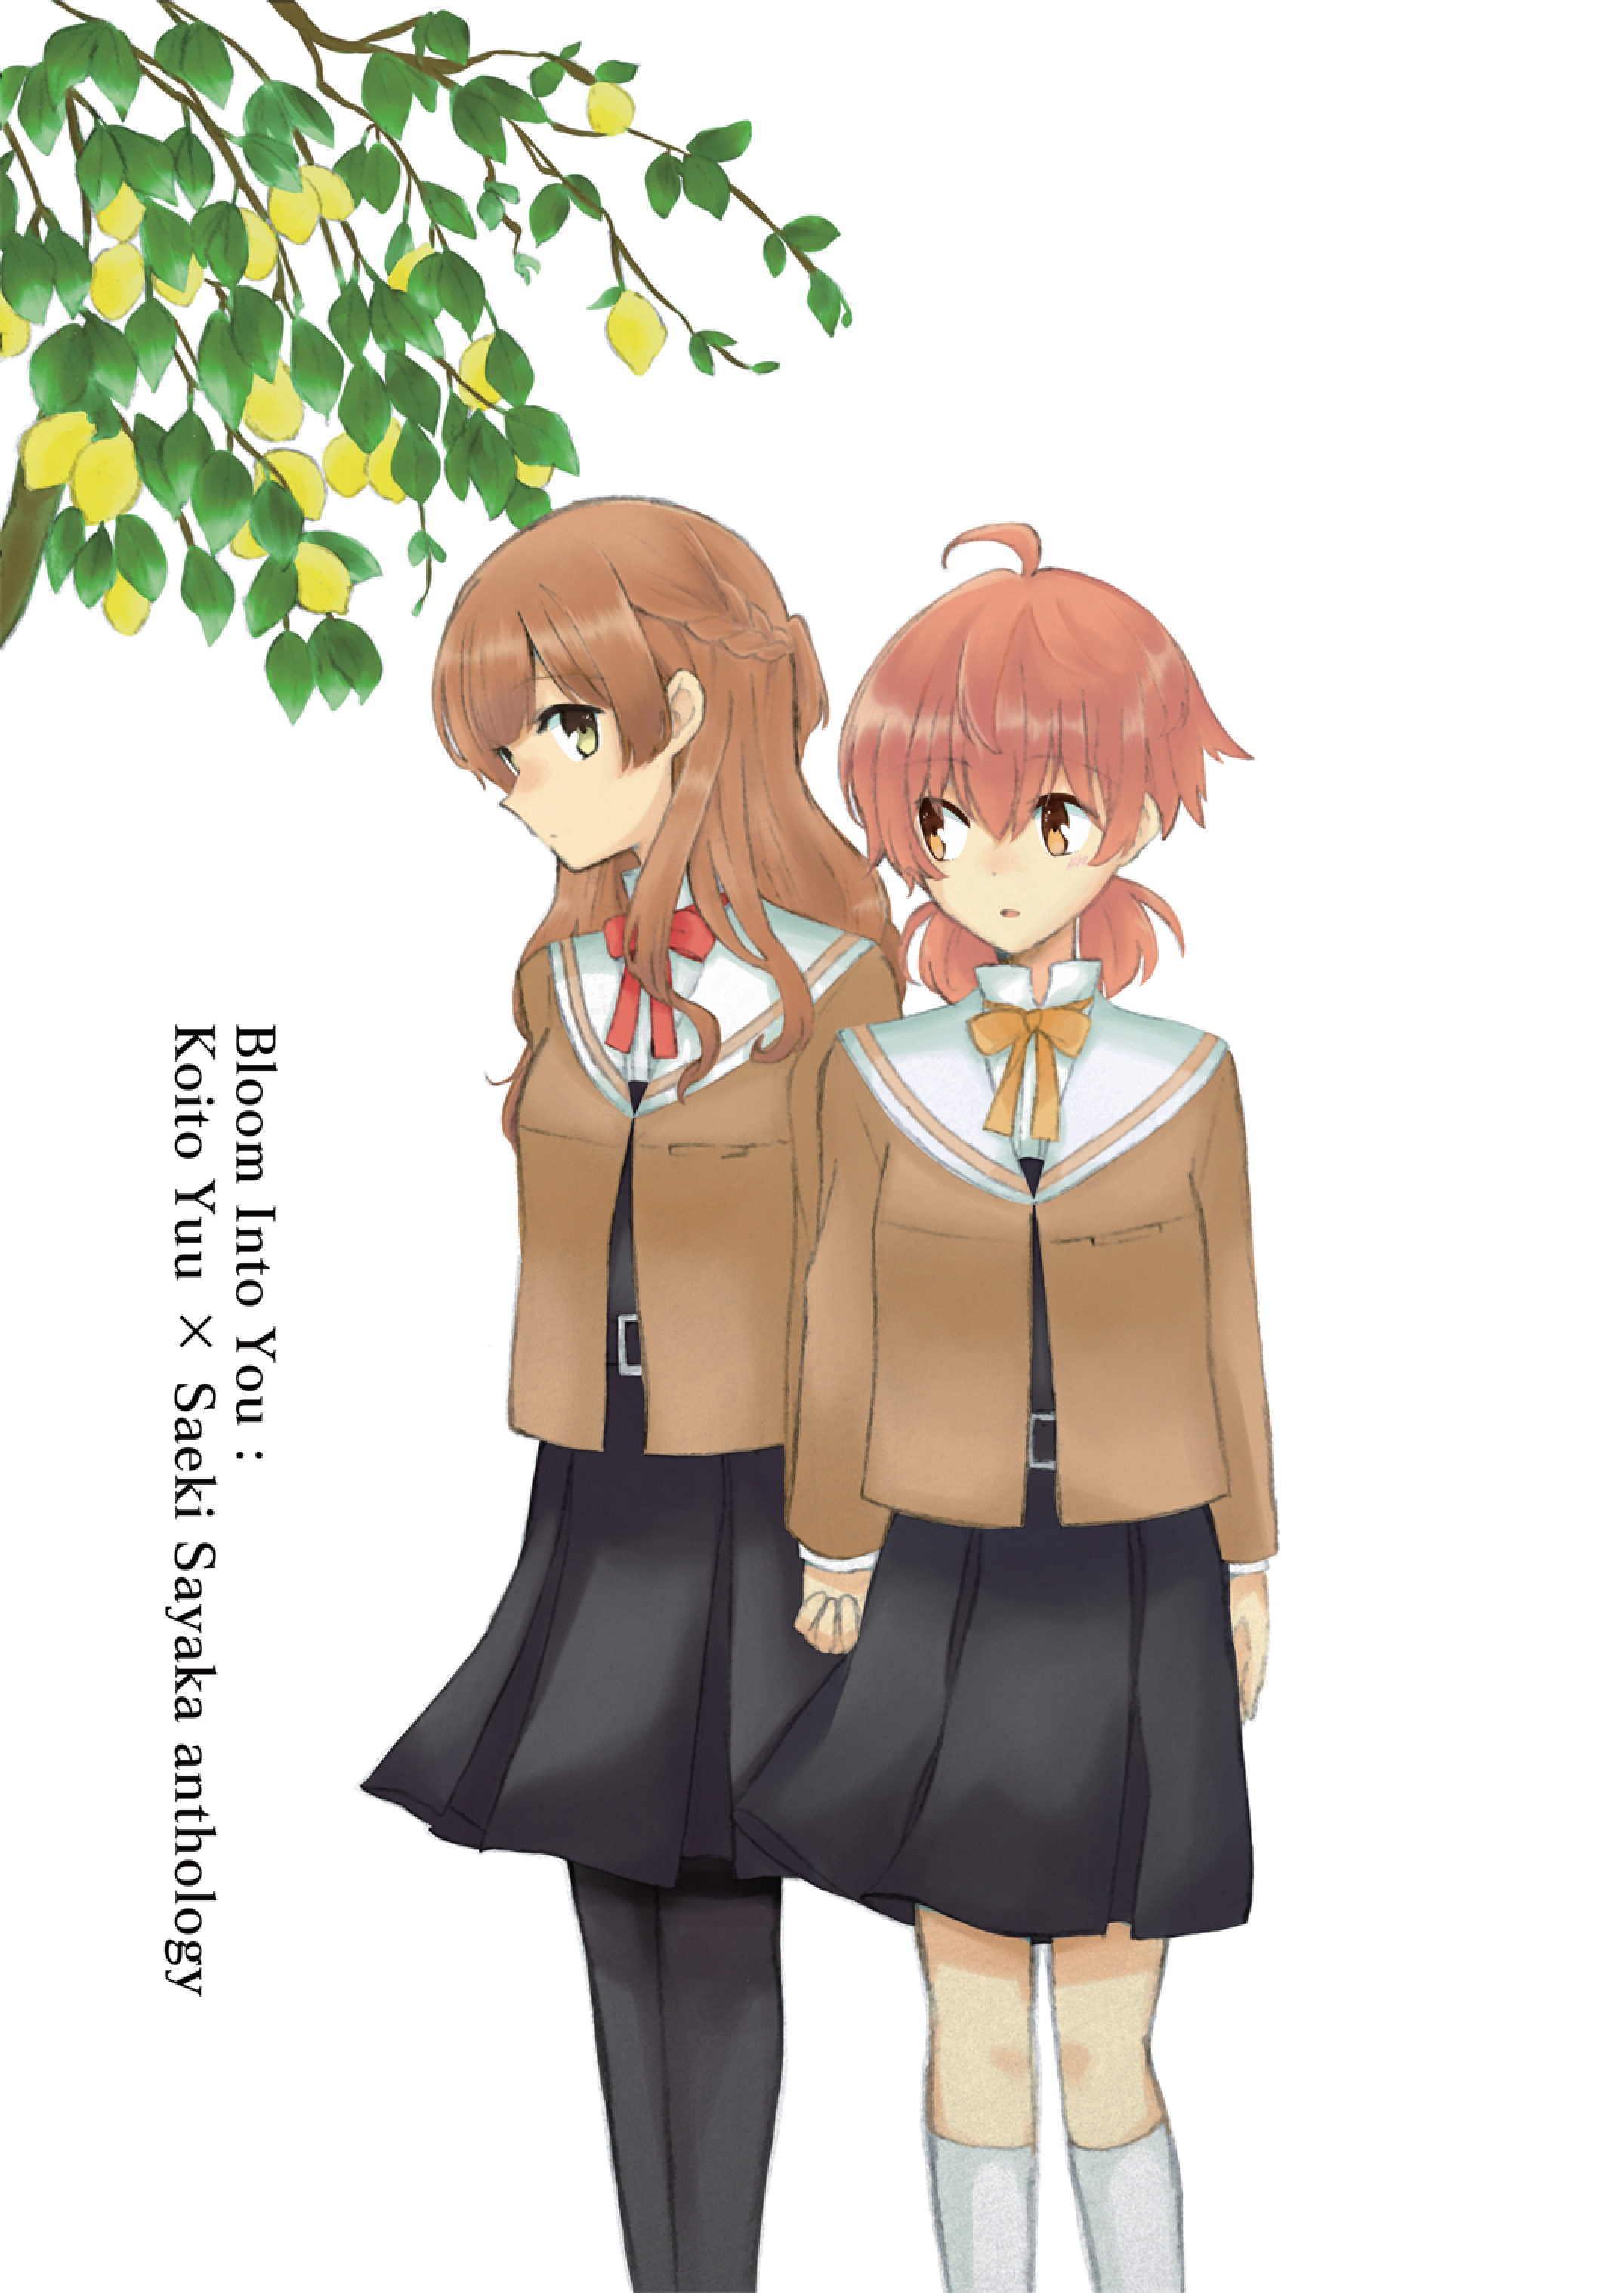 koito yuu and saeki sayaka (yagate kimi ni naru) drawn by manga_chan